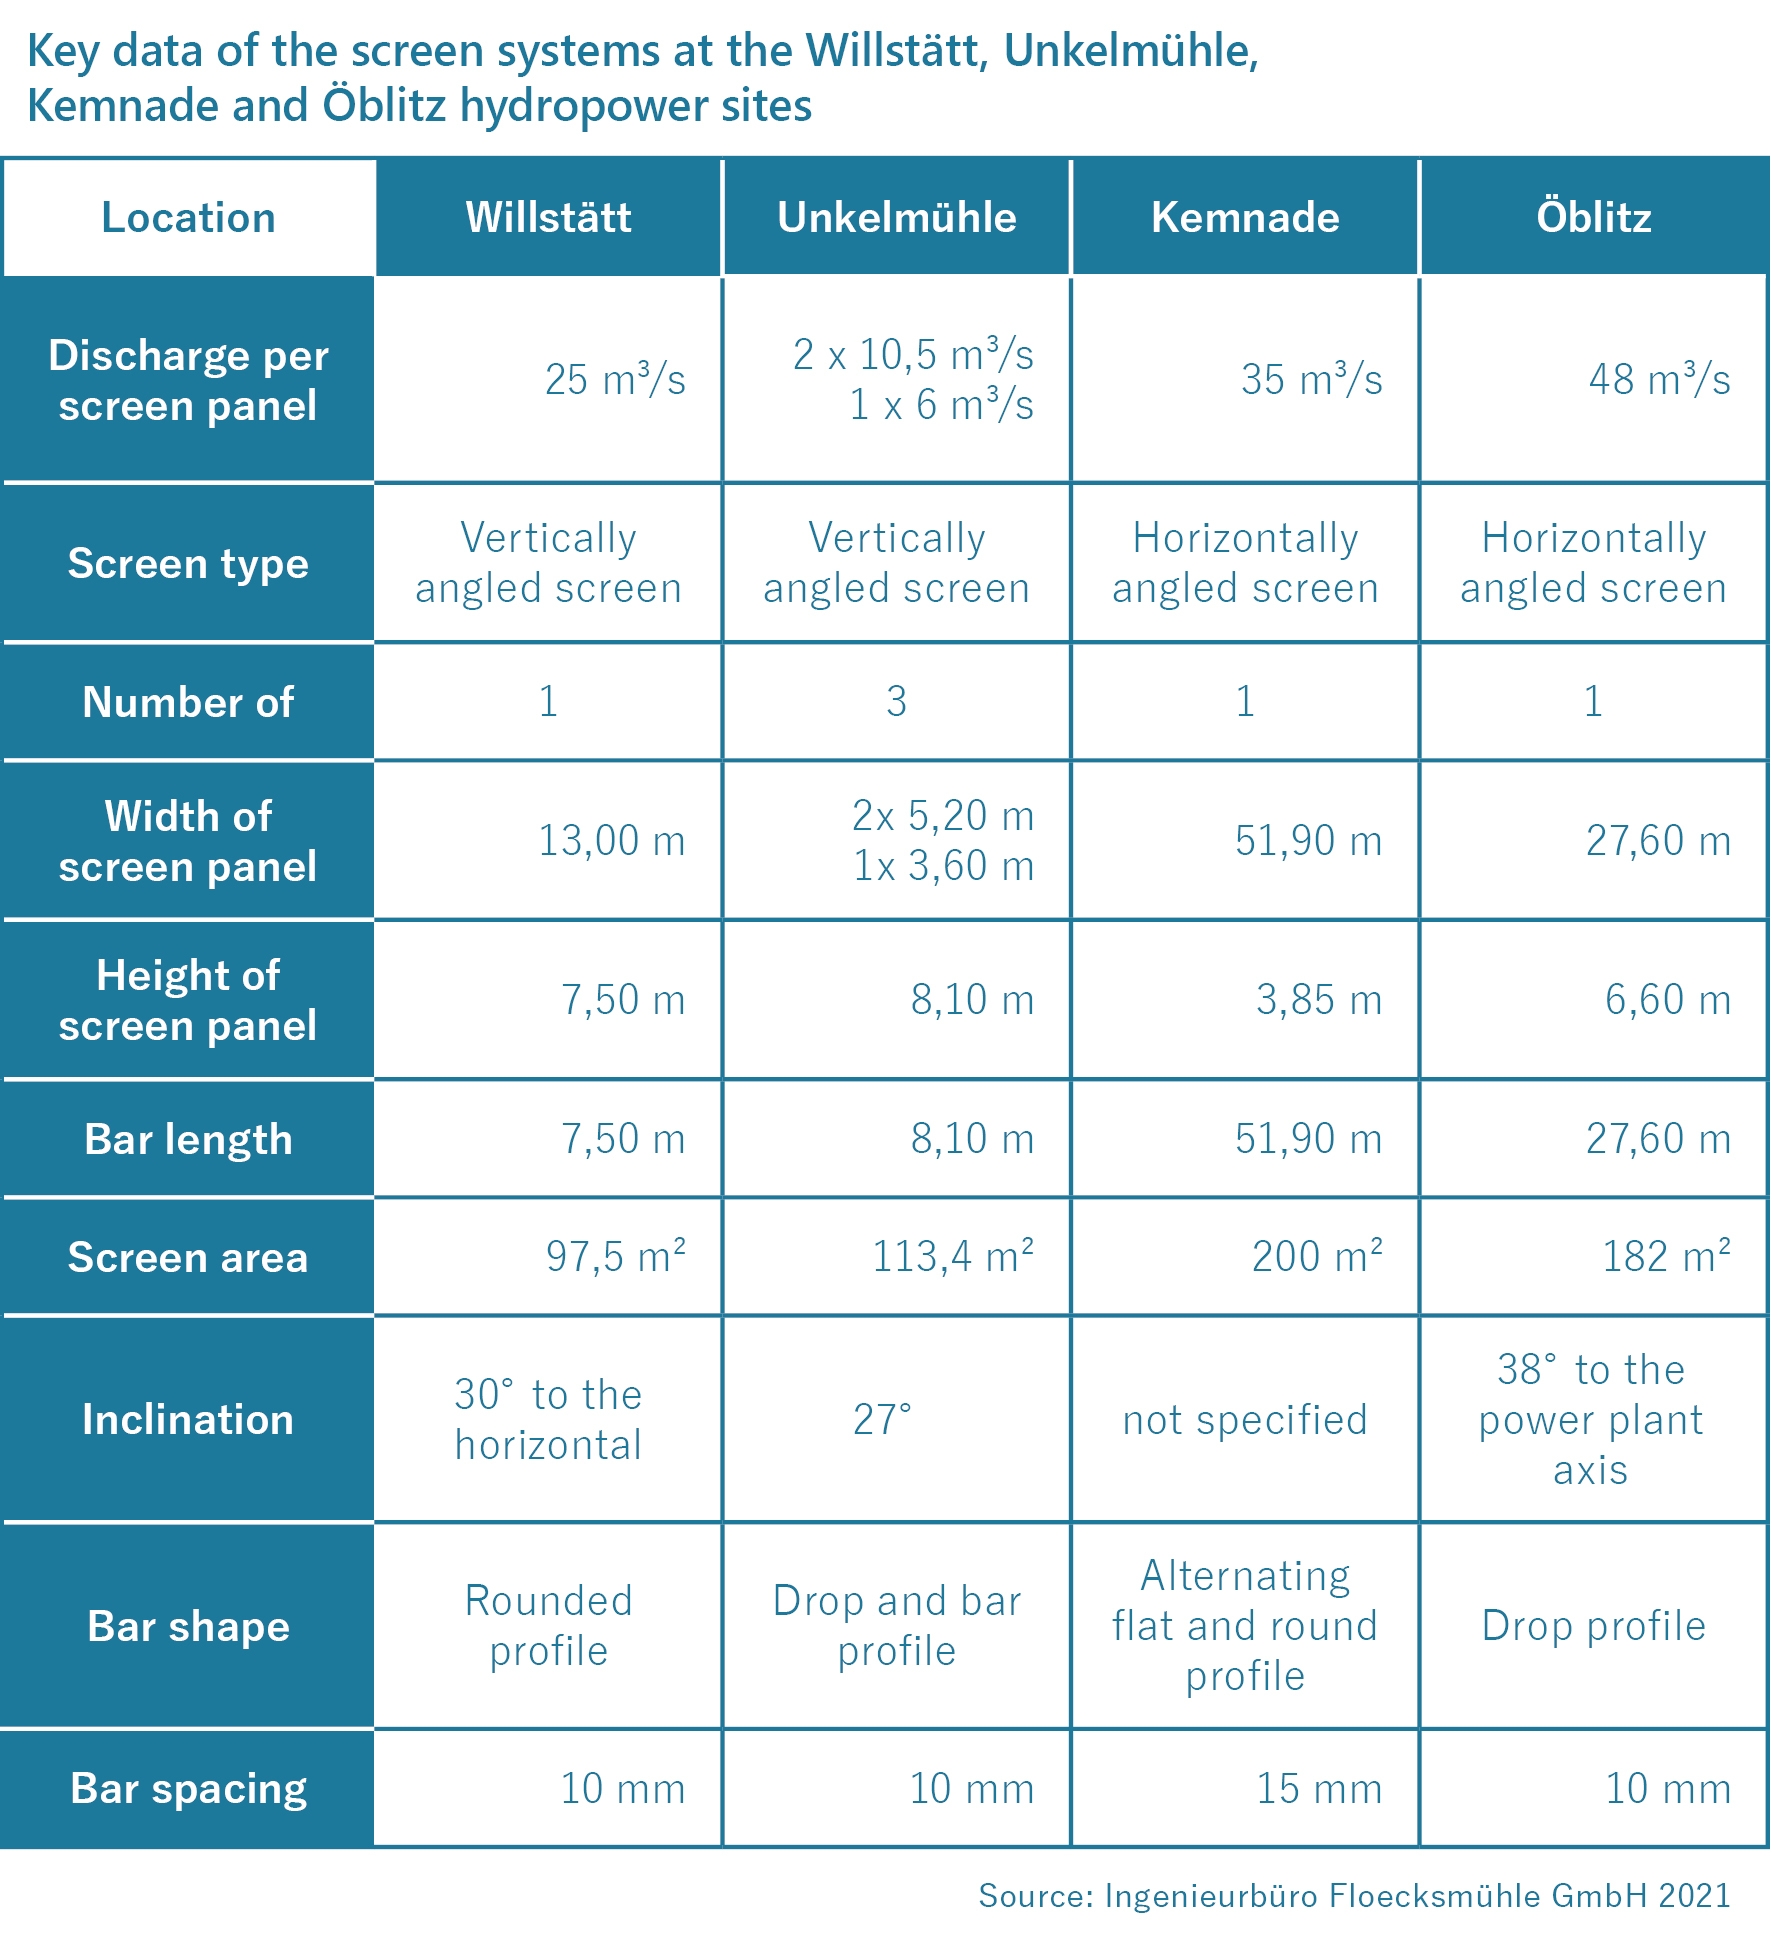 Key data of the screen systems at the Willstätt, Unkelmühle, Kemnade and Öblitz hydropower sites